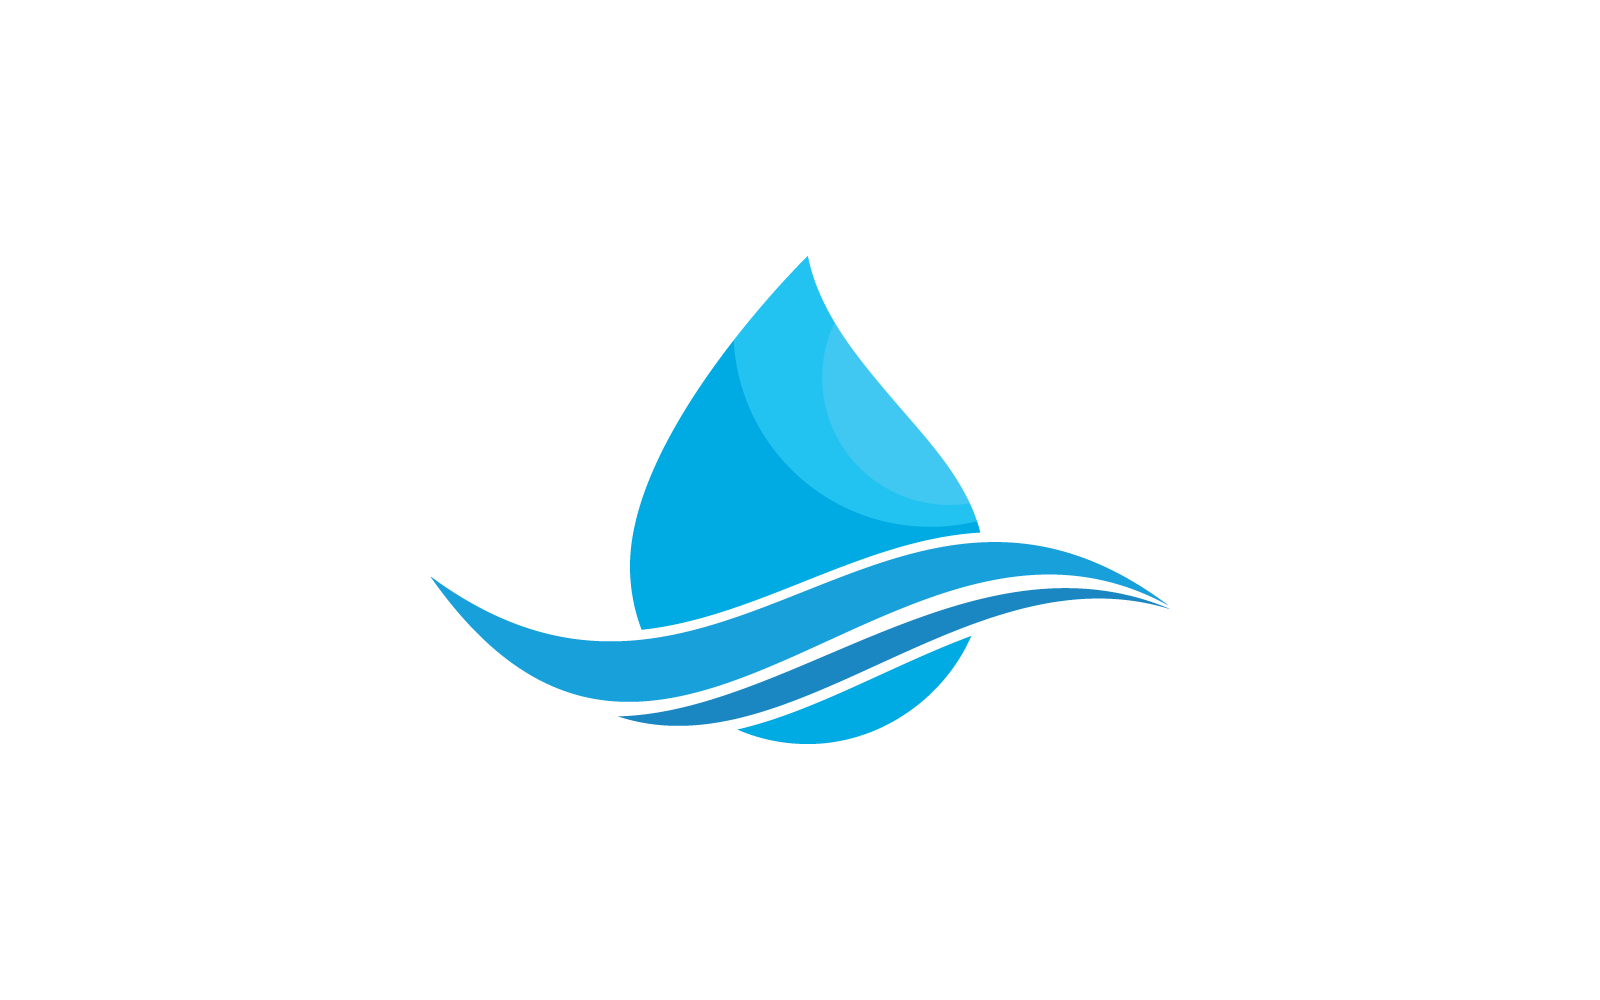 Water drop logo vector design template